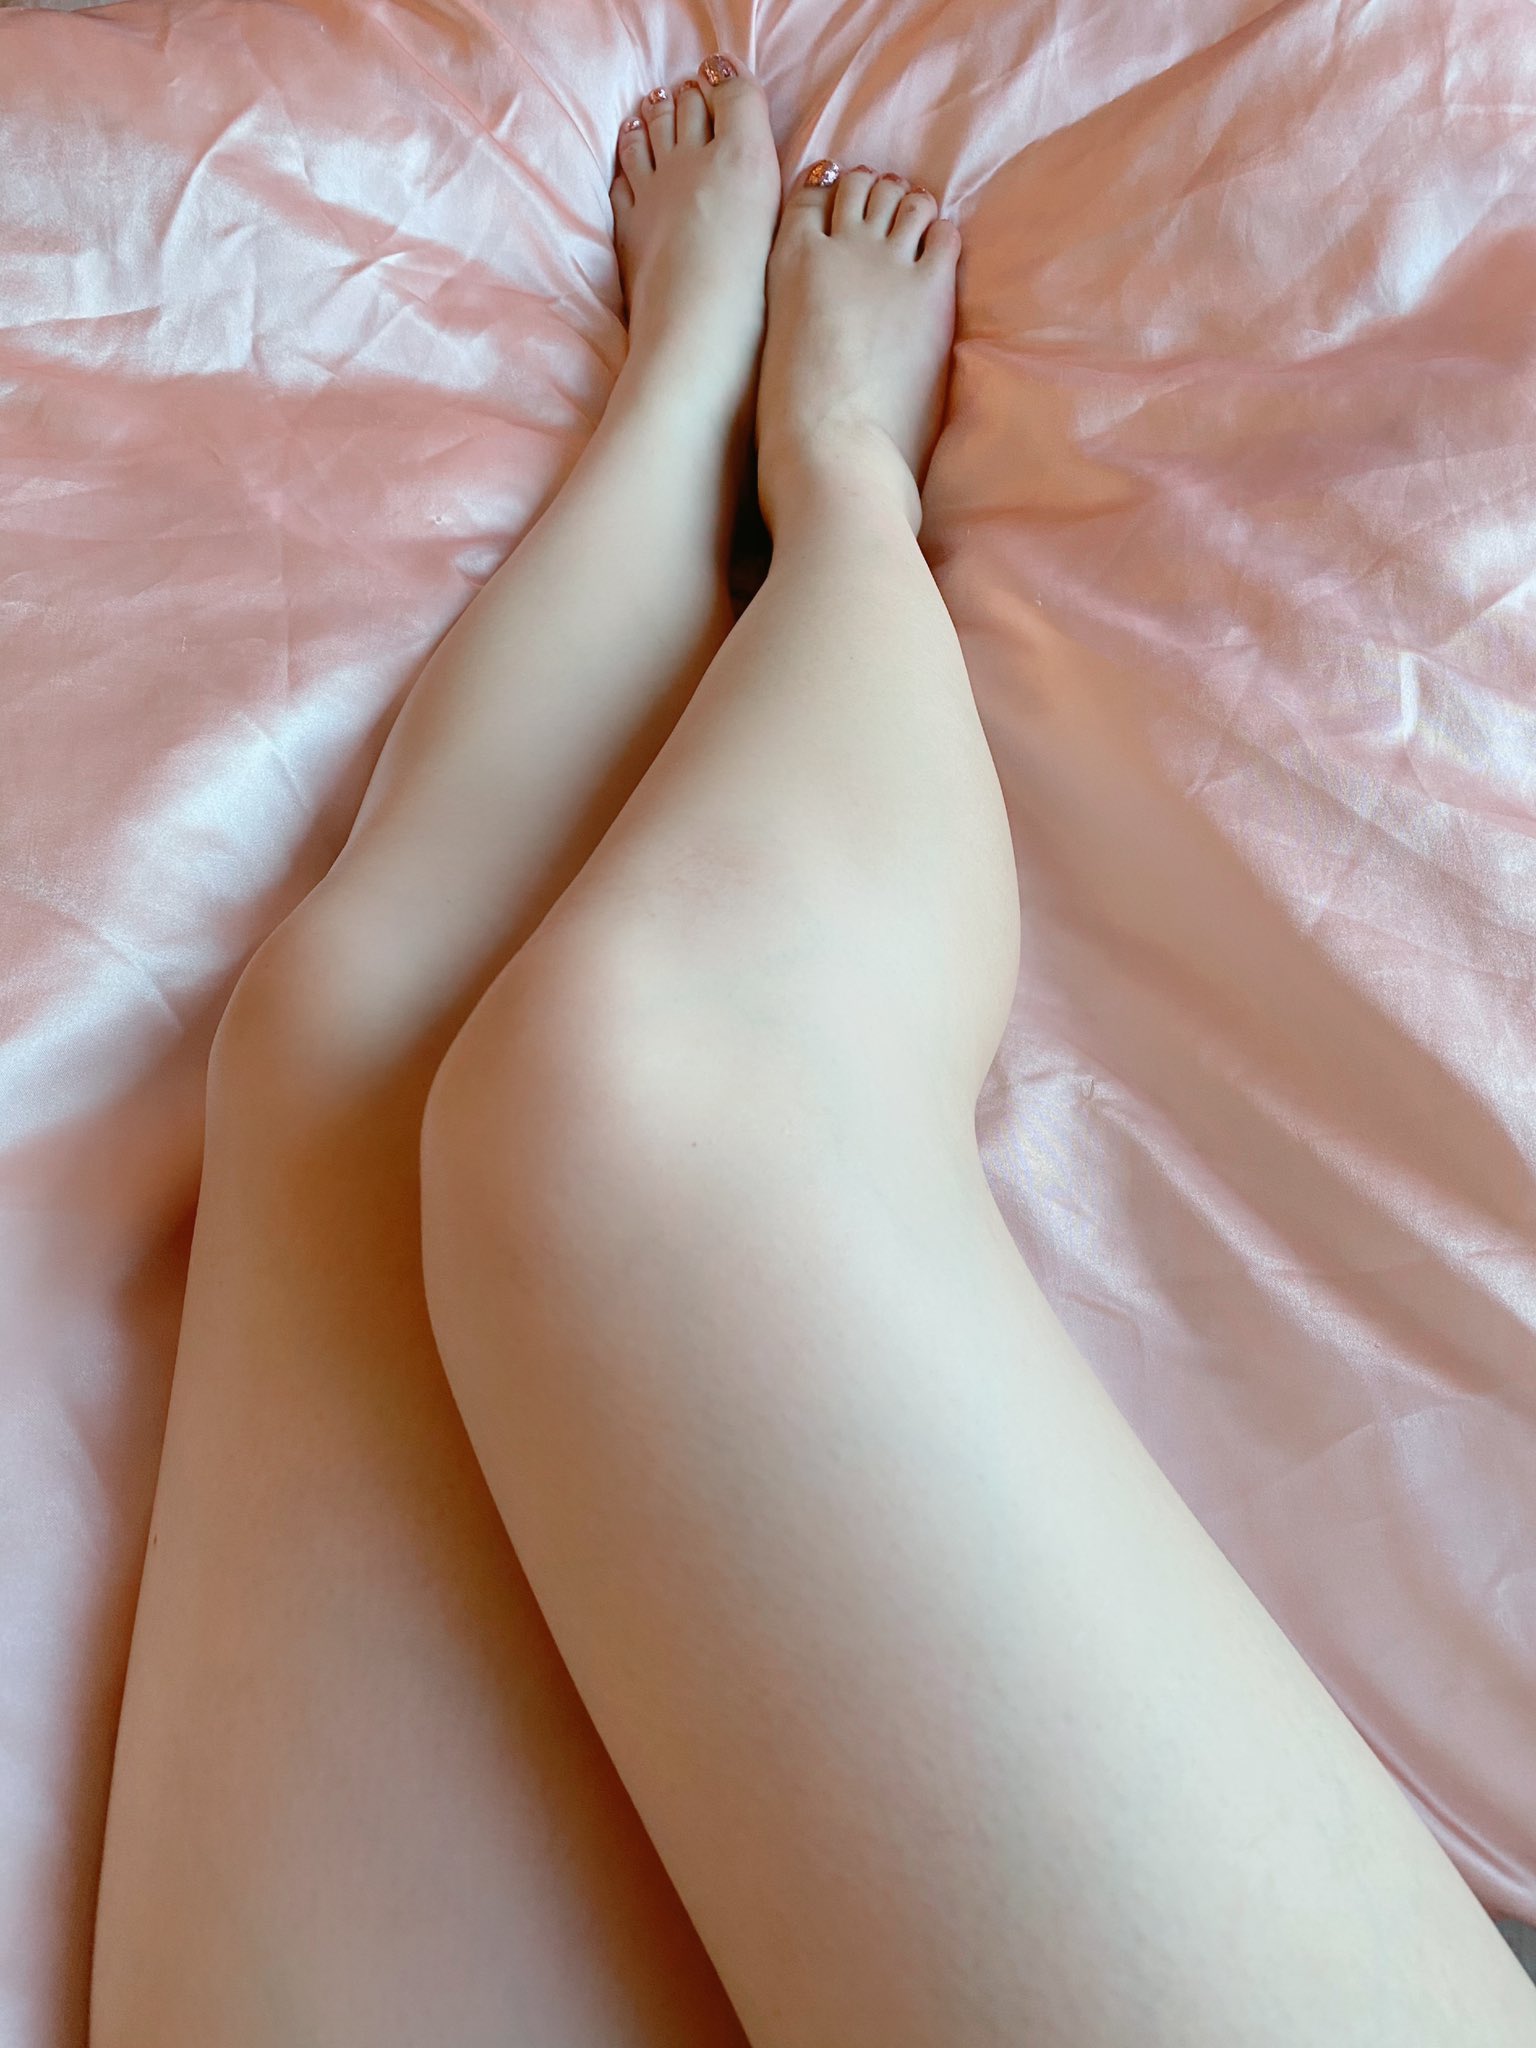 TW Pornstars - Miina. Twitter. Good nightðŸ’• #naked #model #nude #legs #sexy  #porn #onlyfan. 4:16 AM - 23 Jun 2020